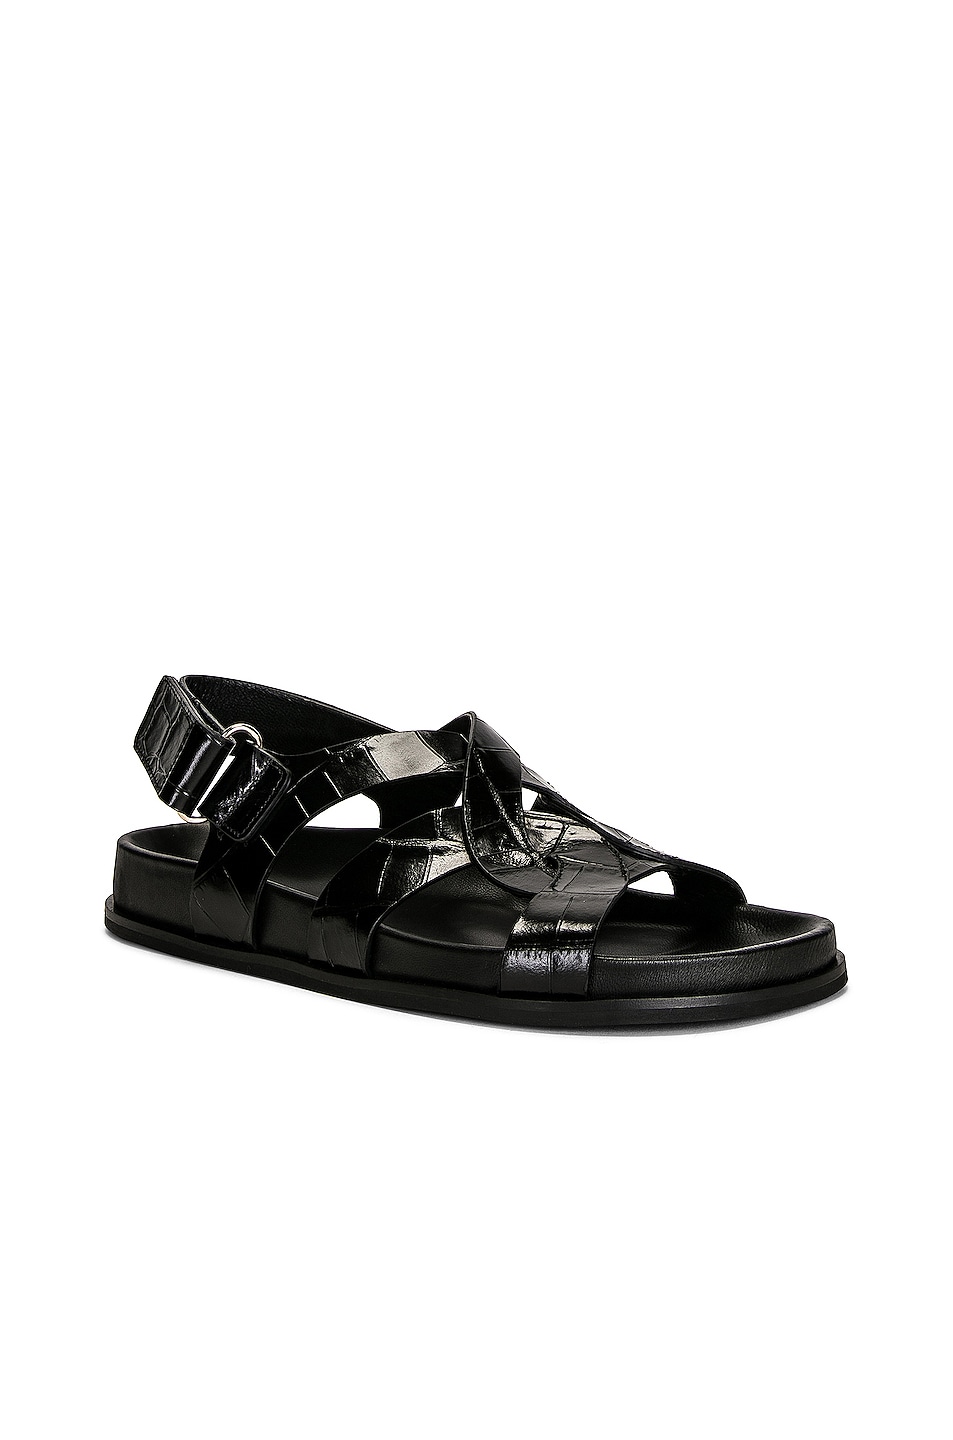 Toteme The Chunky Sandal in Black Croco | FWRD